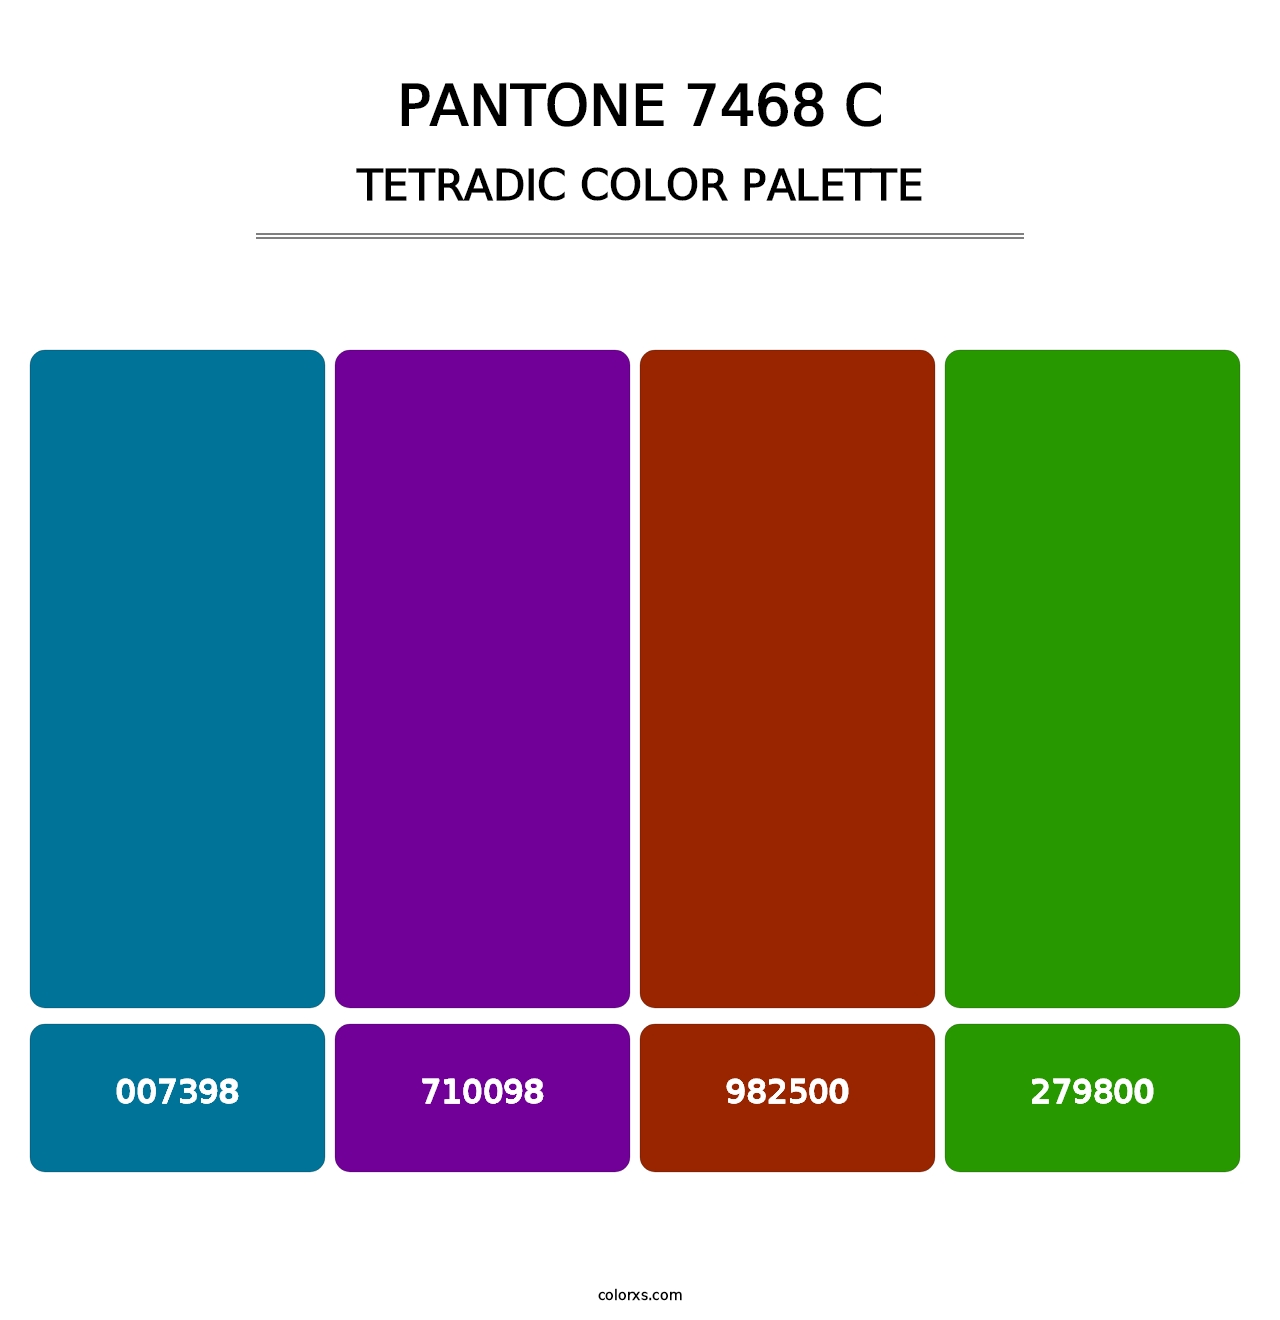 PANTONE 7468 C - Tetradic Color Palette